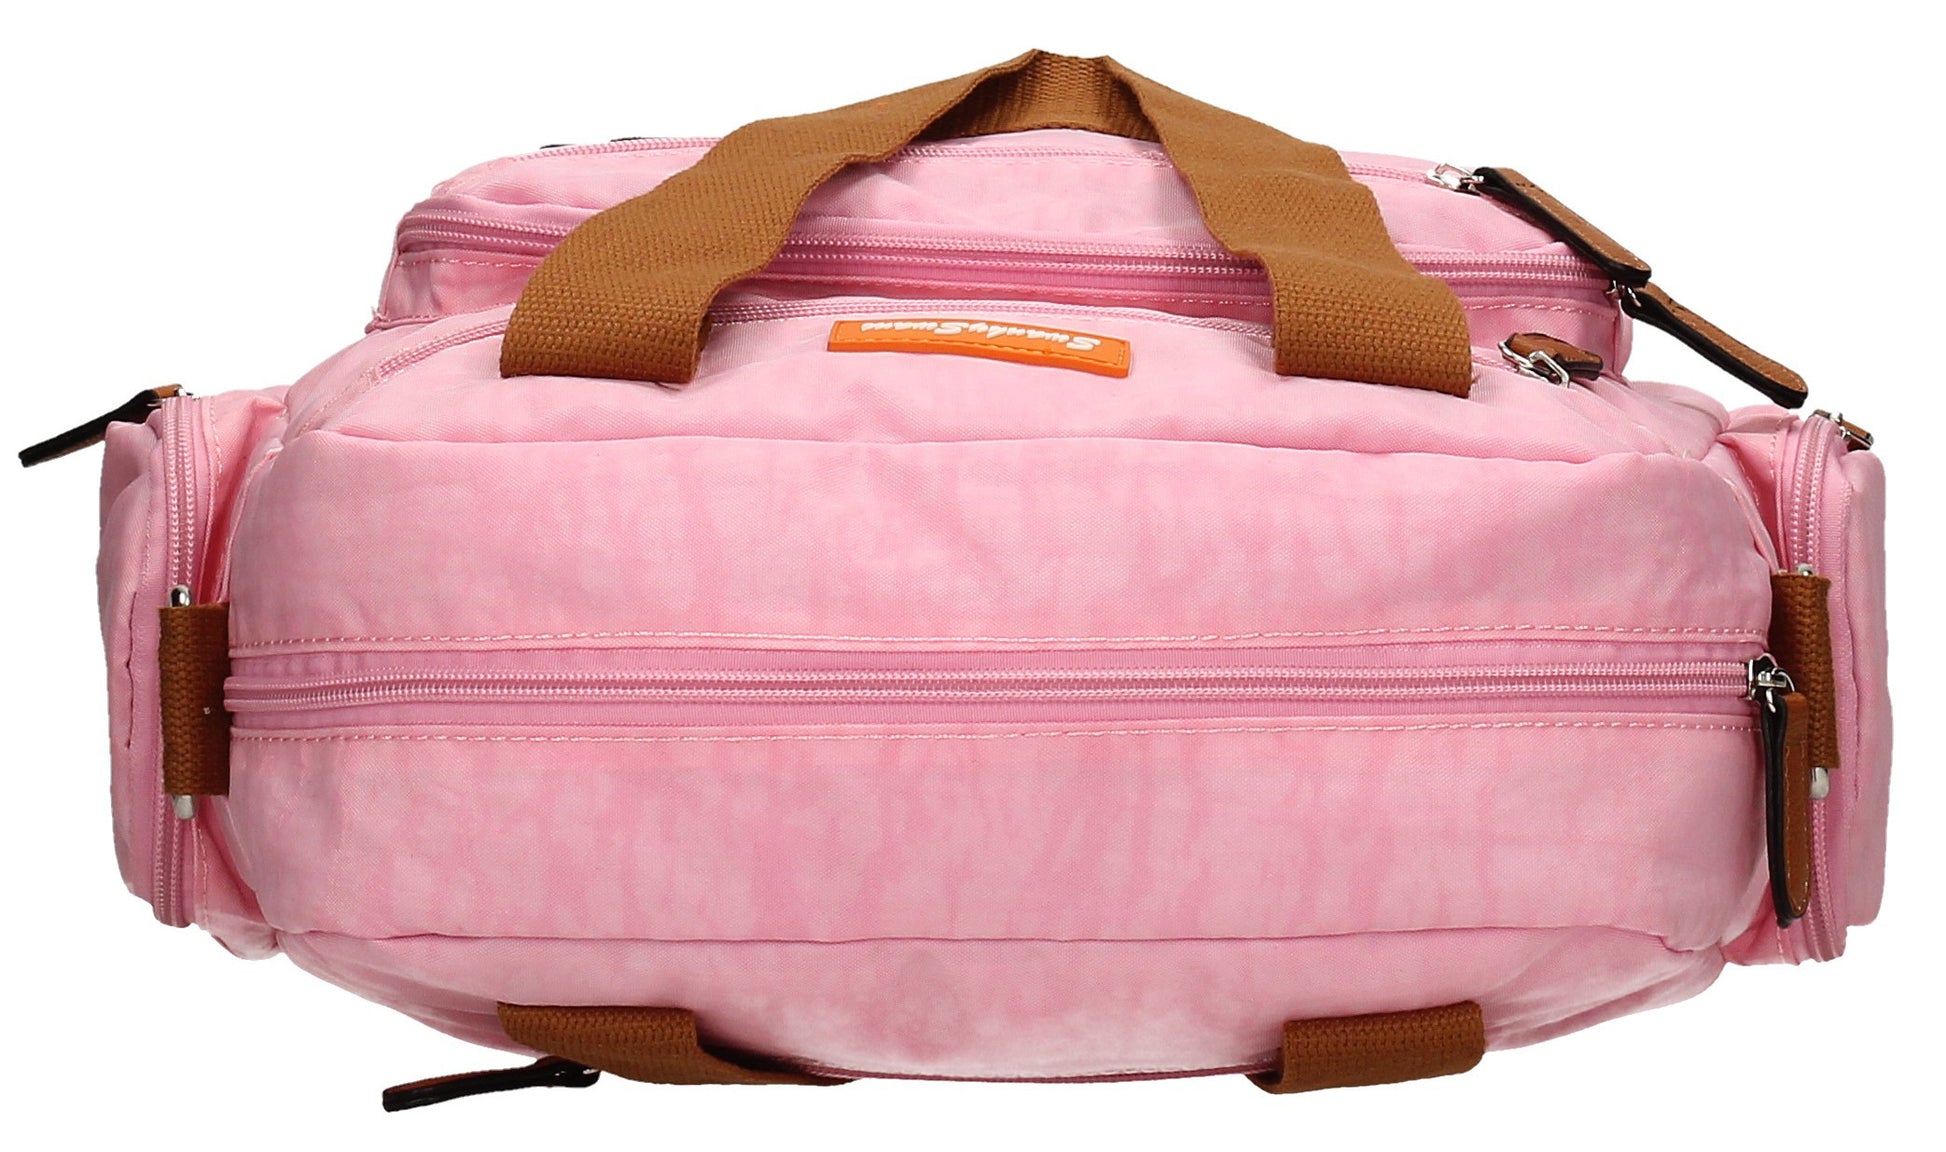 Swanky Swans Kempton Handbag with Lola Cat Motif Baby pinkCheap Fashion Wedding Work School